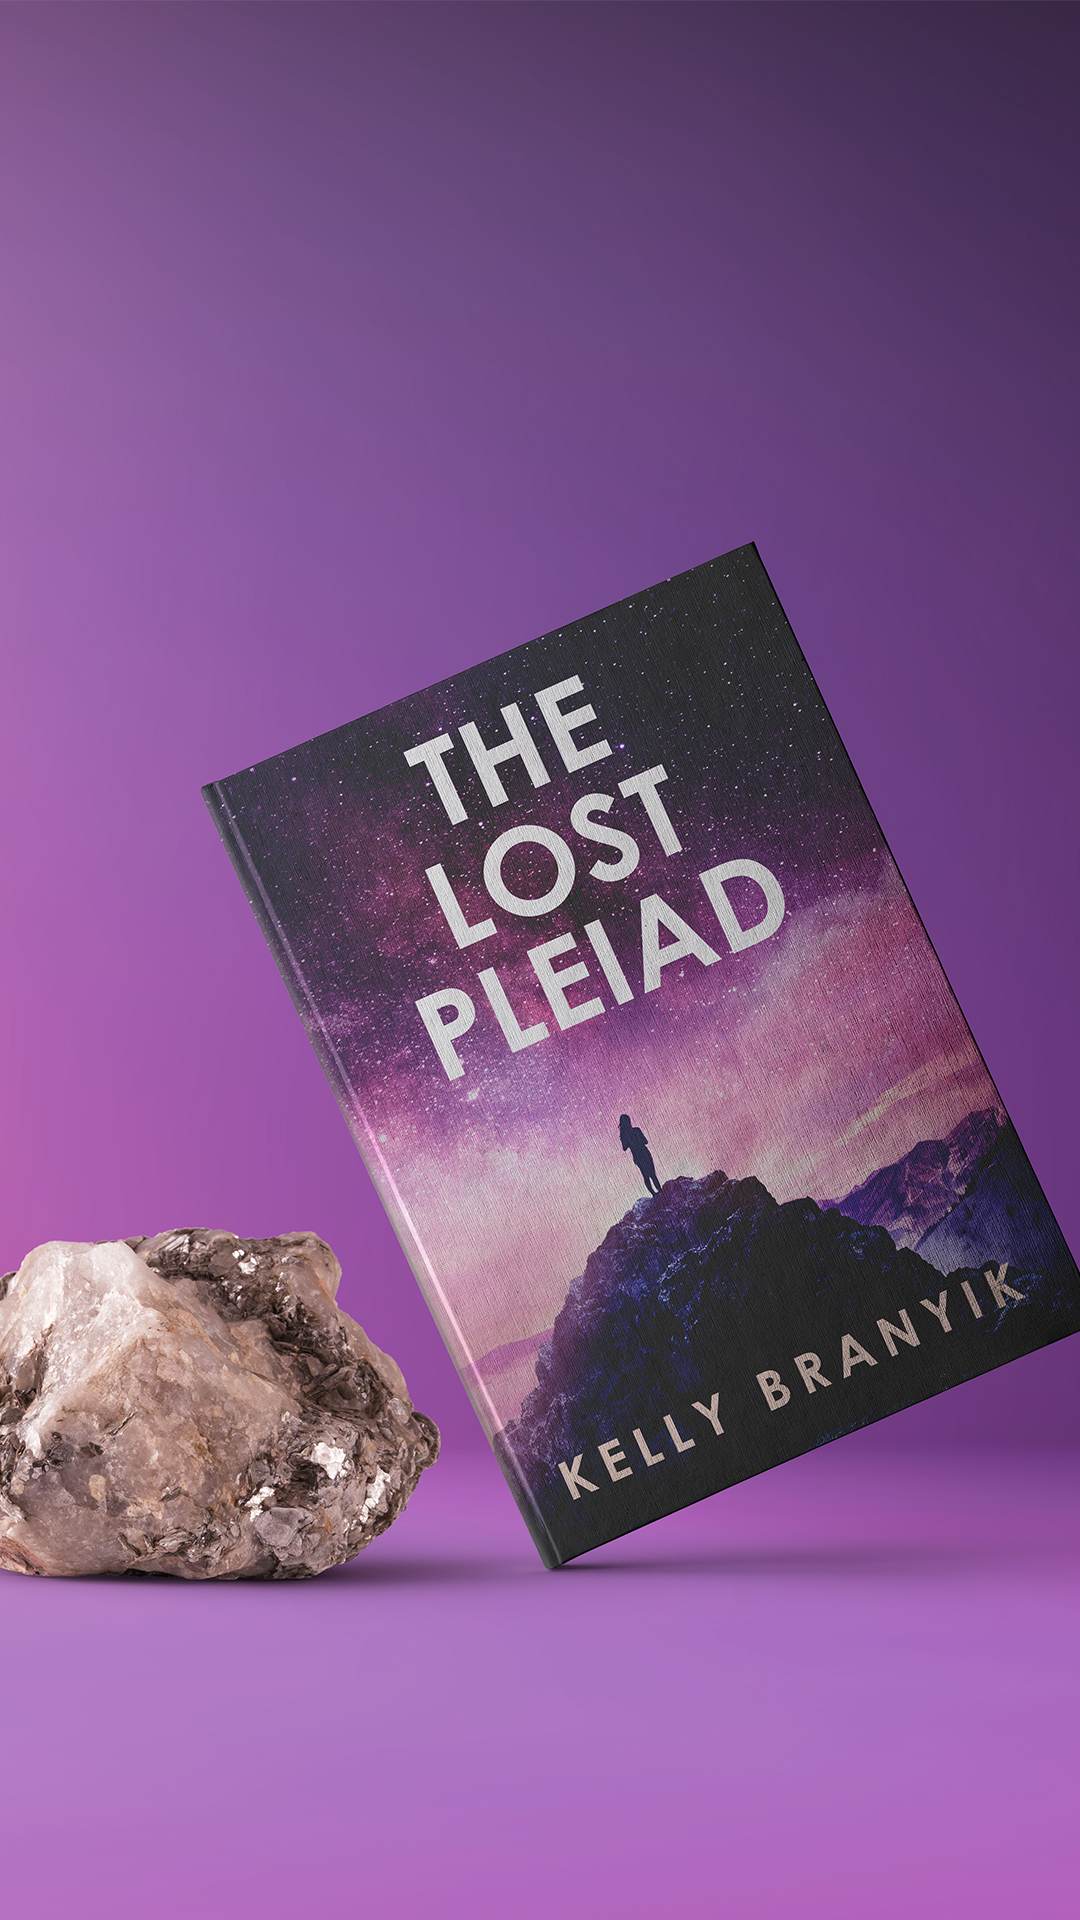 The Lost Pleiad Science Fiction Novel by Kelly Branyik